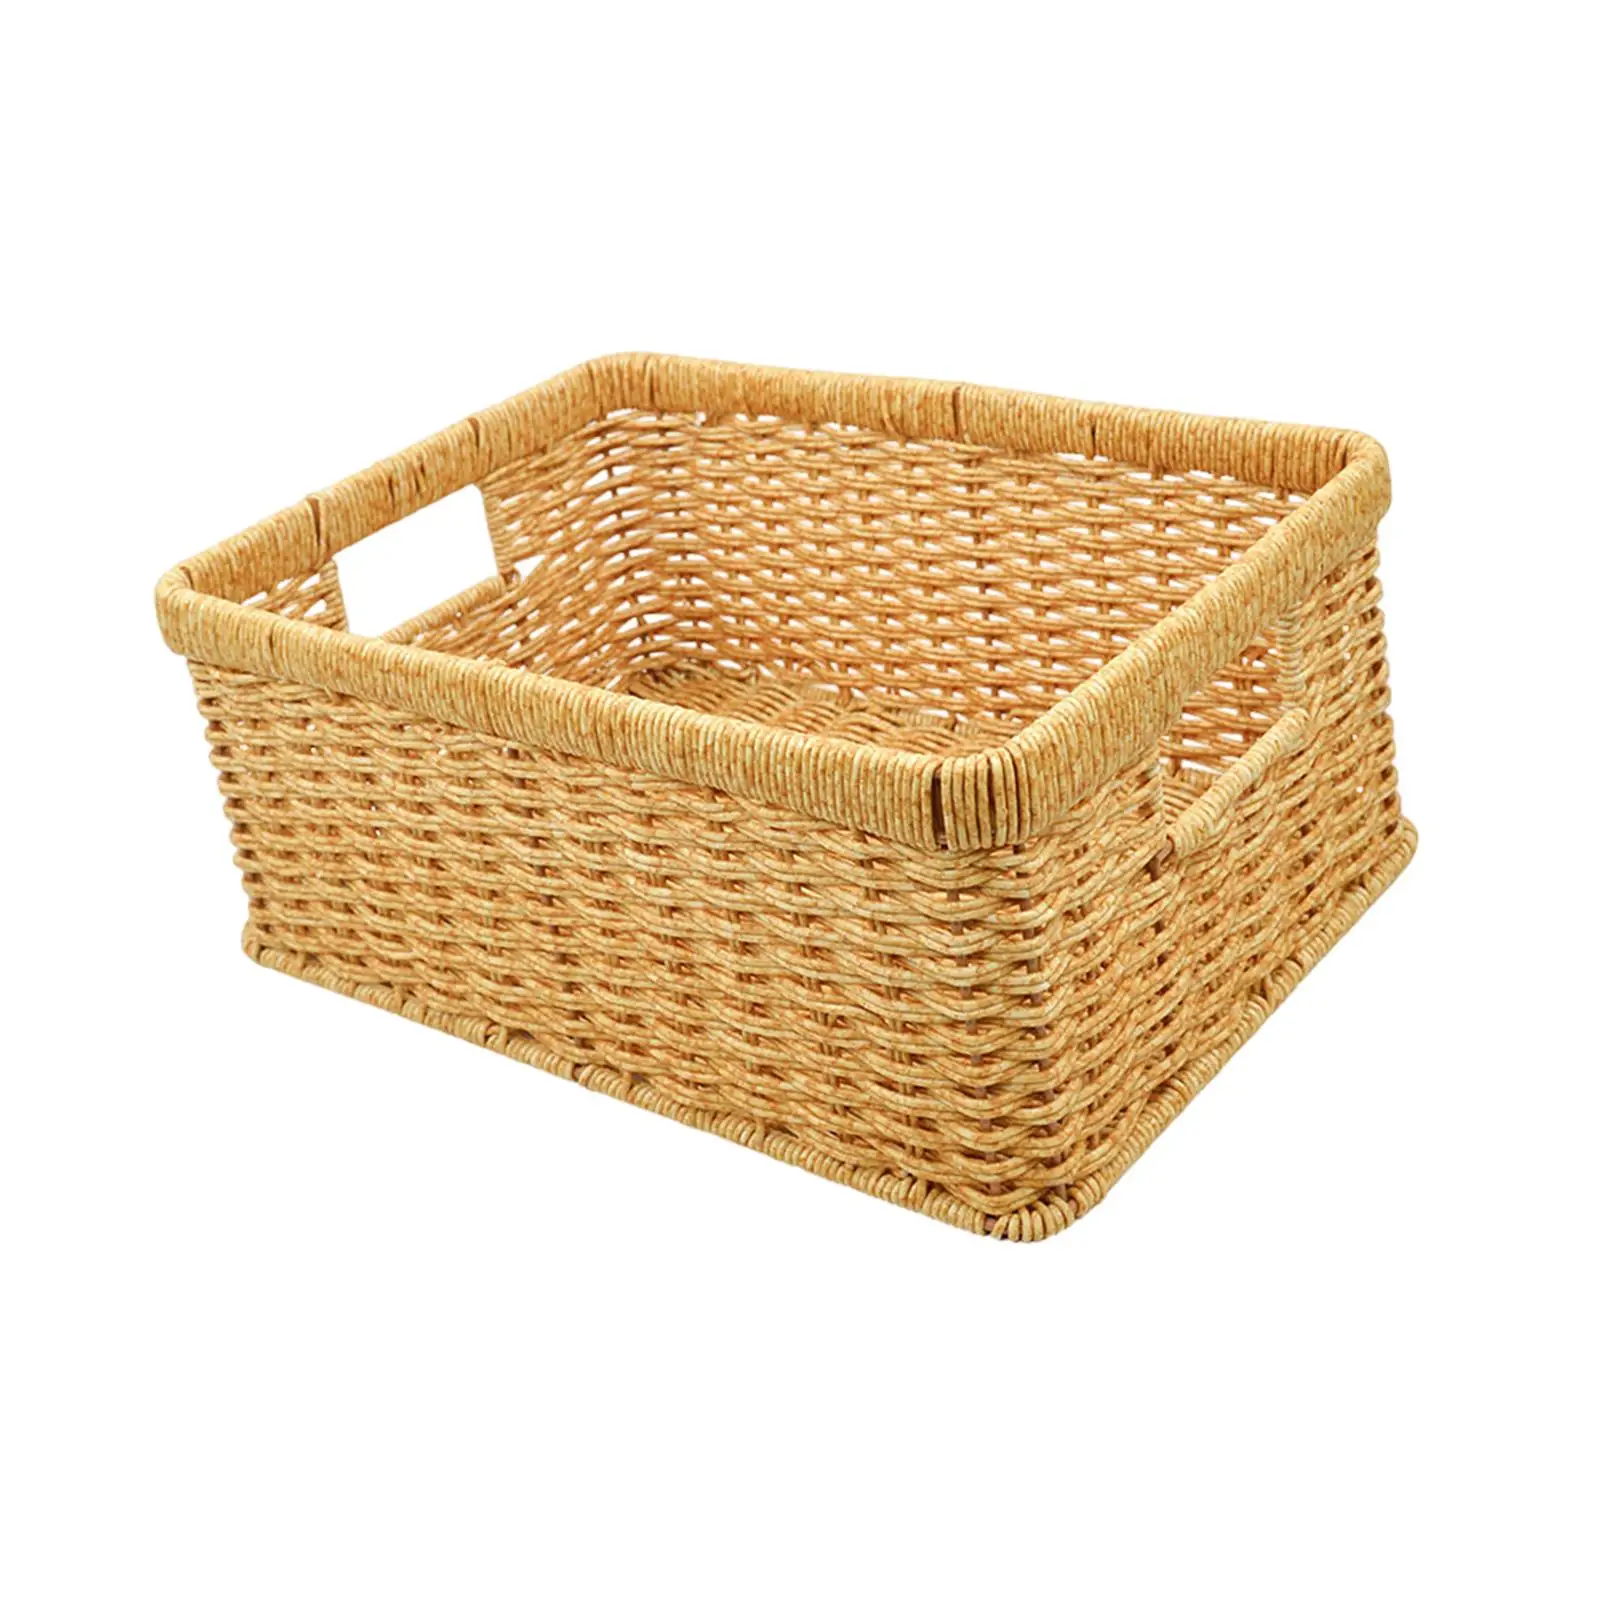 Rattan Basket Multipurpose with Handles Sundries Storage Basket Woven Storage Basket for Countertop Living Room Shelf